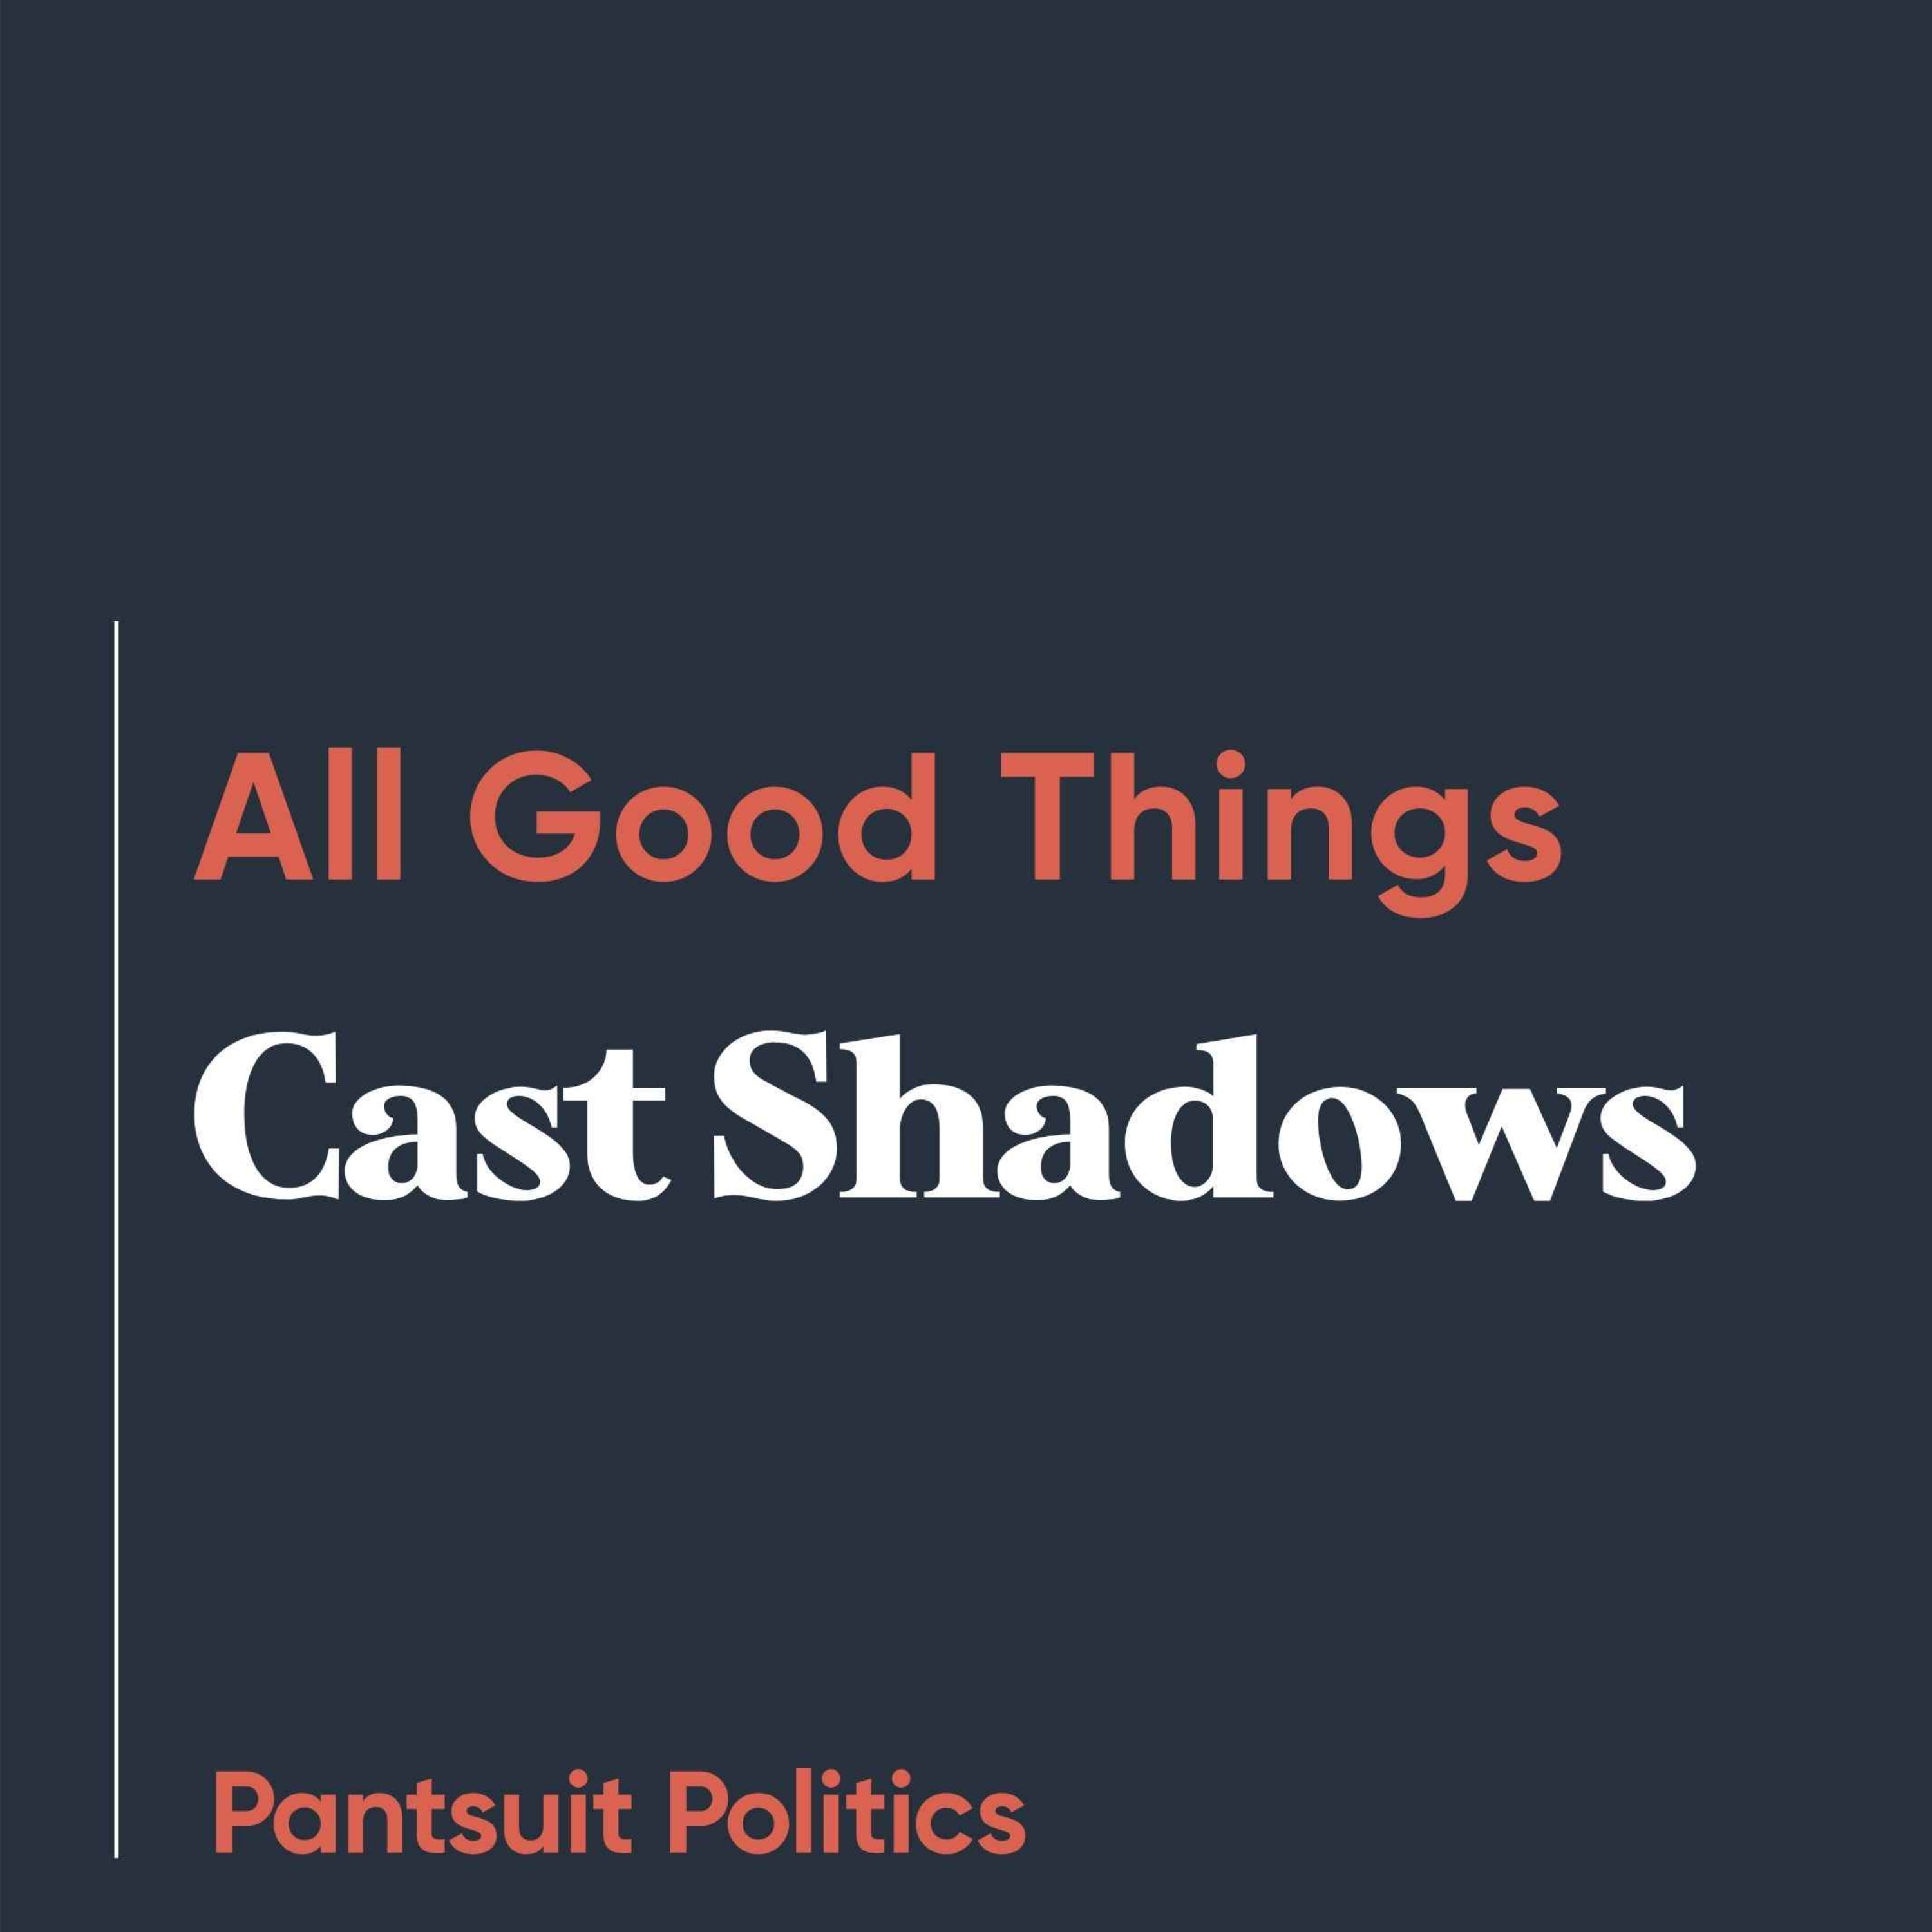 All Good Things Cast Shadows